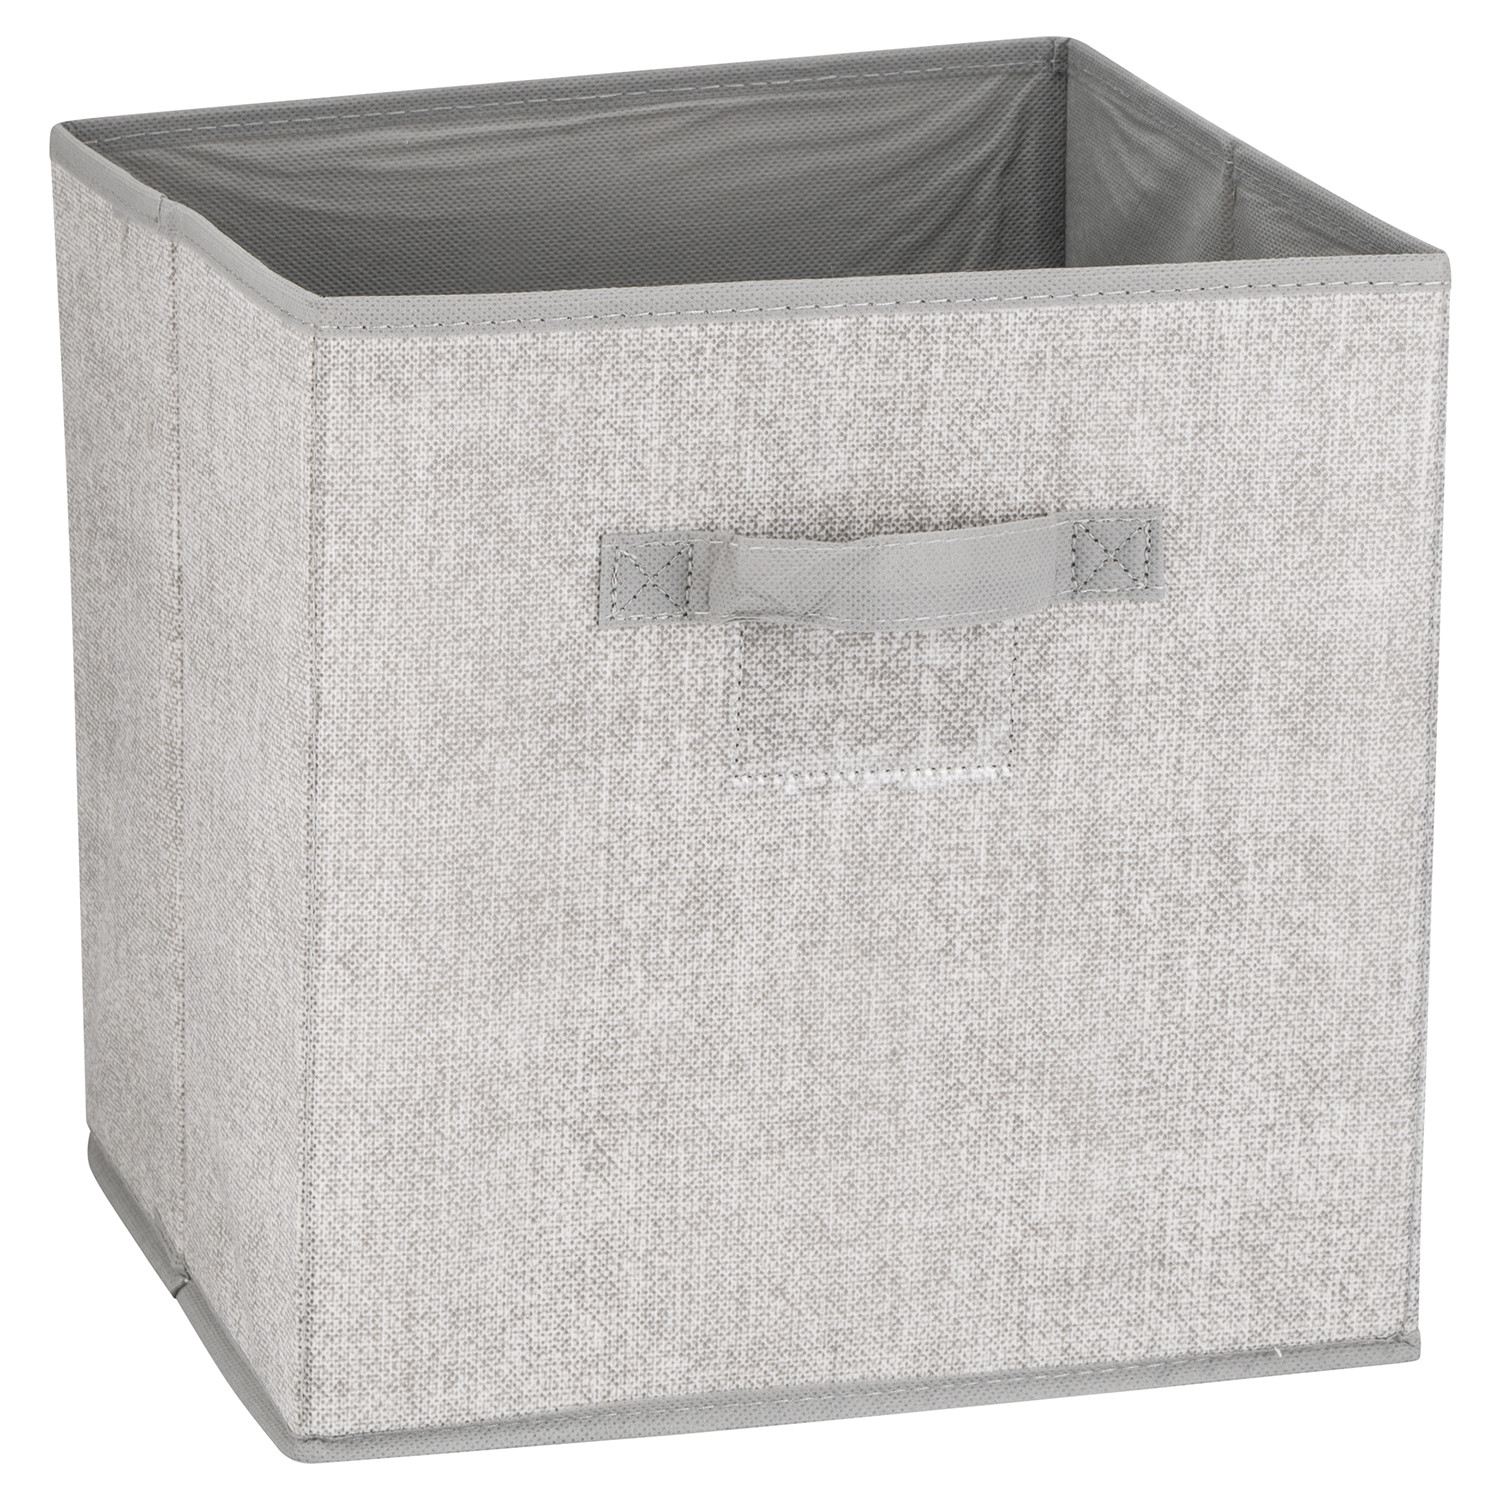 Grey Fabric Cube Storage Box with Handle Image 1